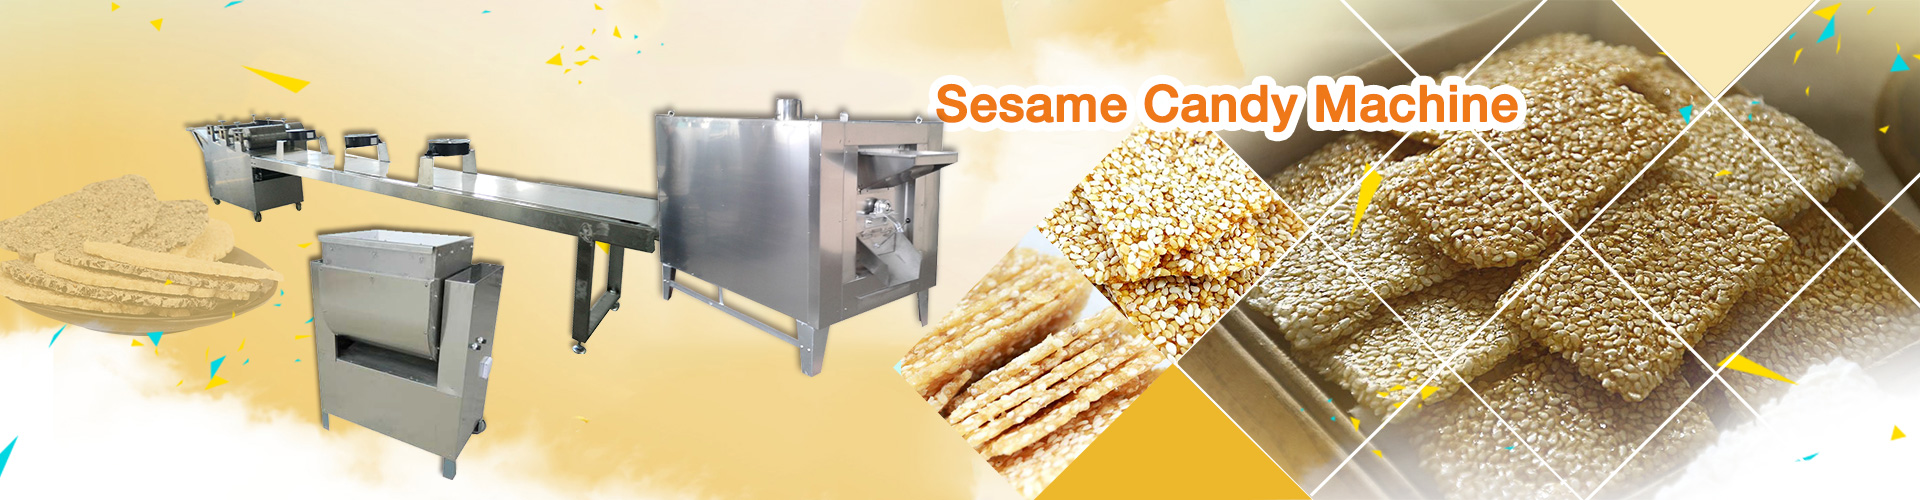 sesame candy machine